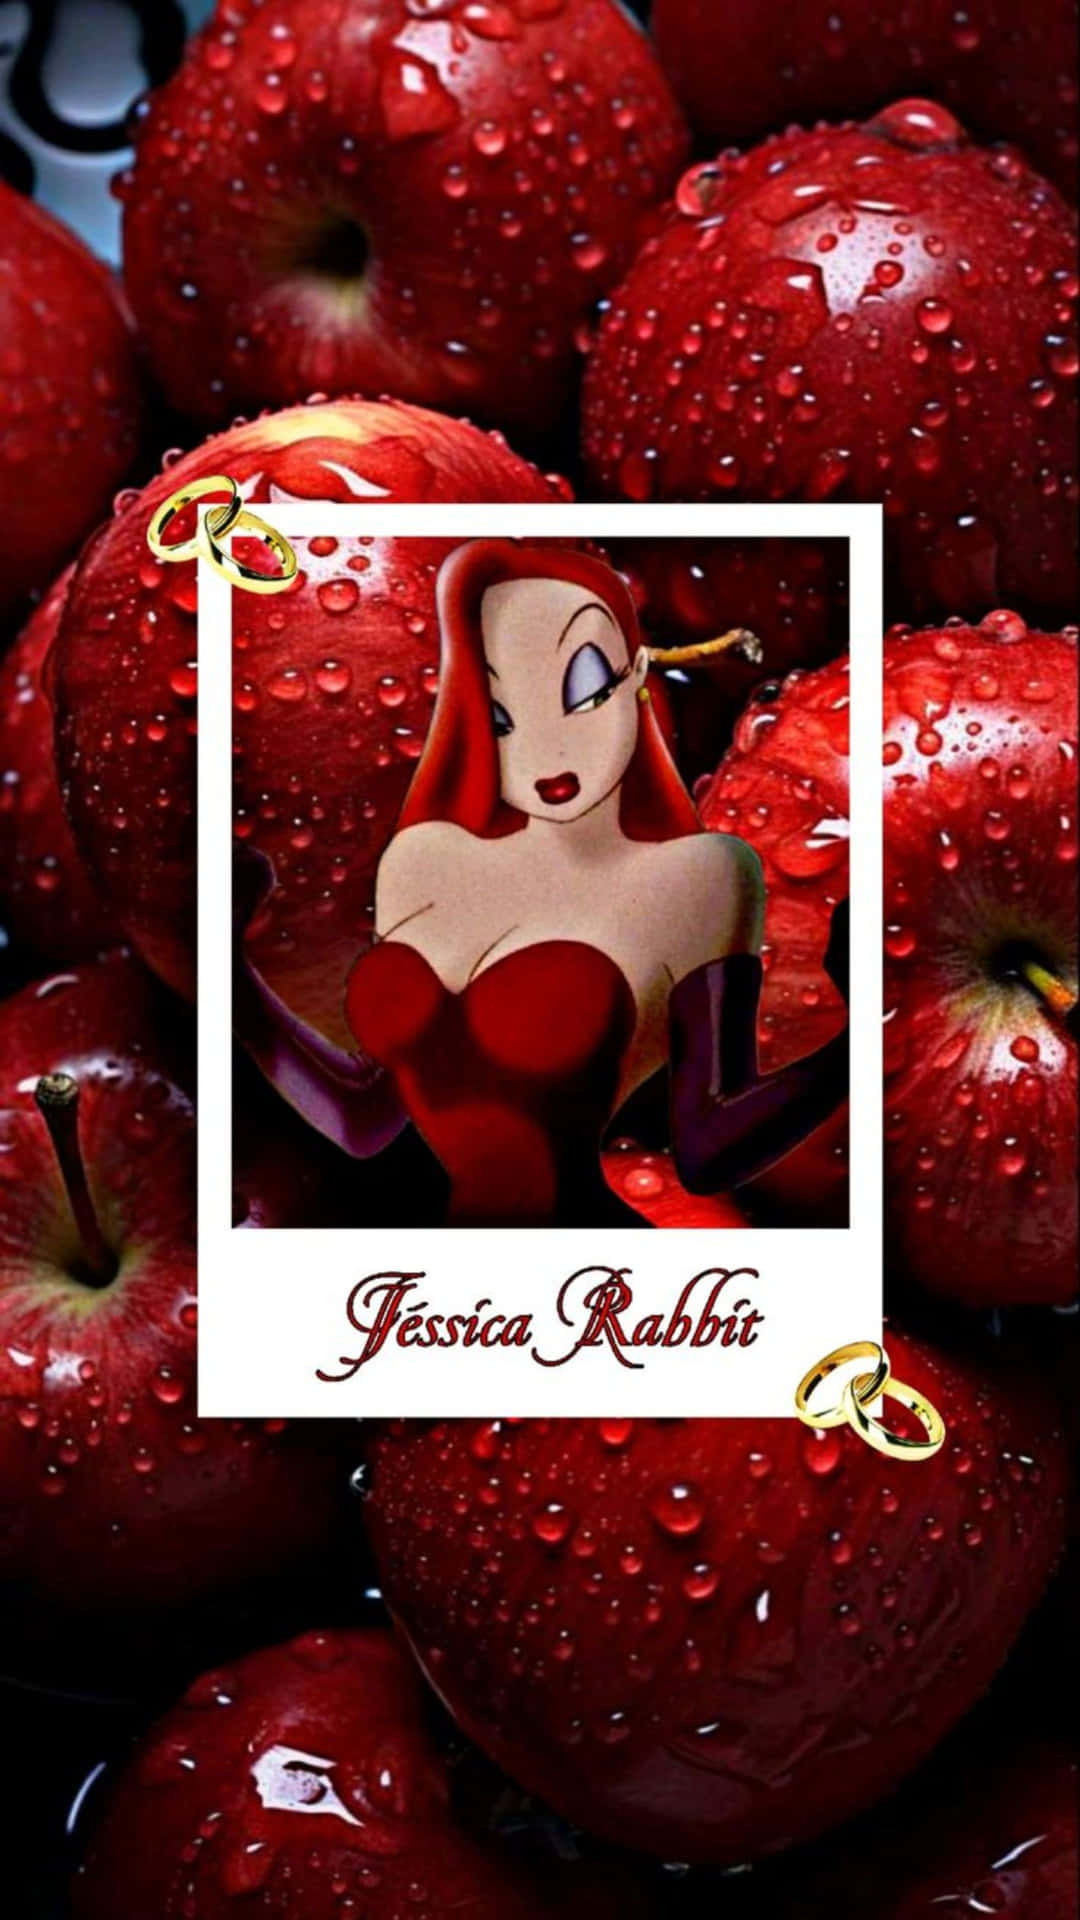 Jessica Rabbit Red Apples Background Background